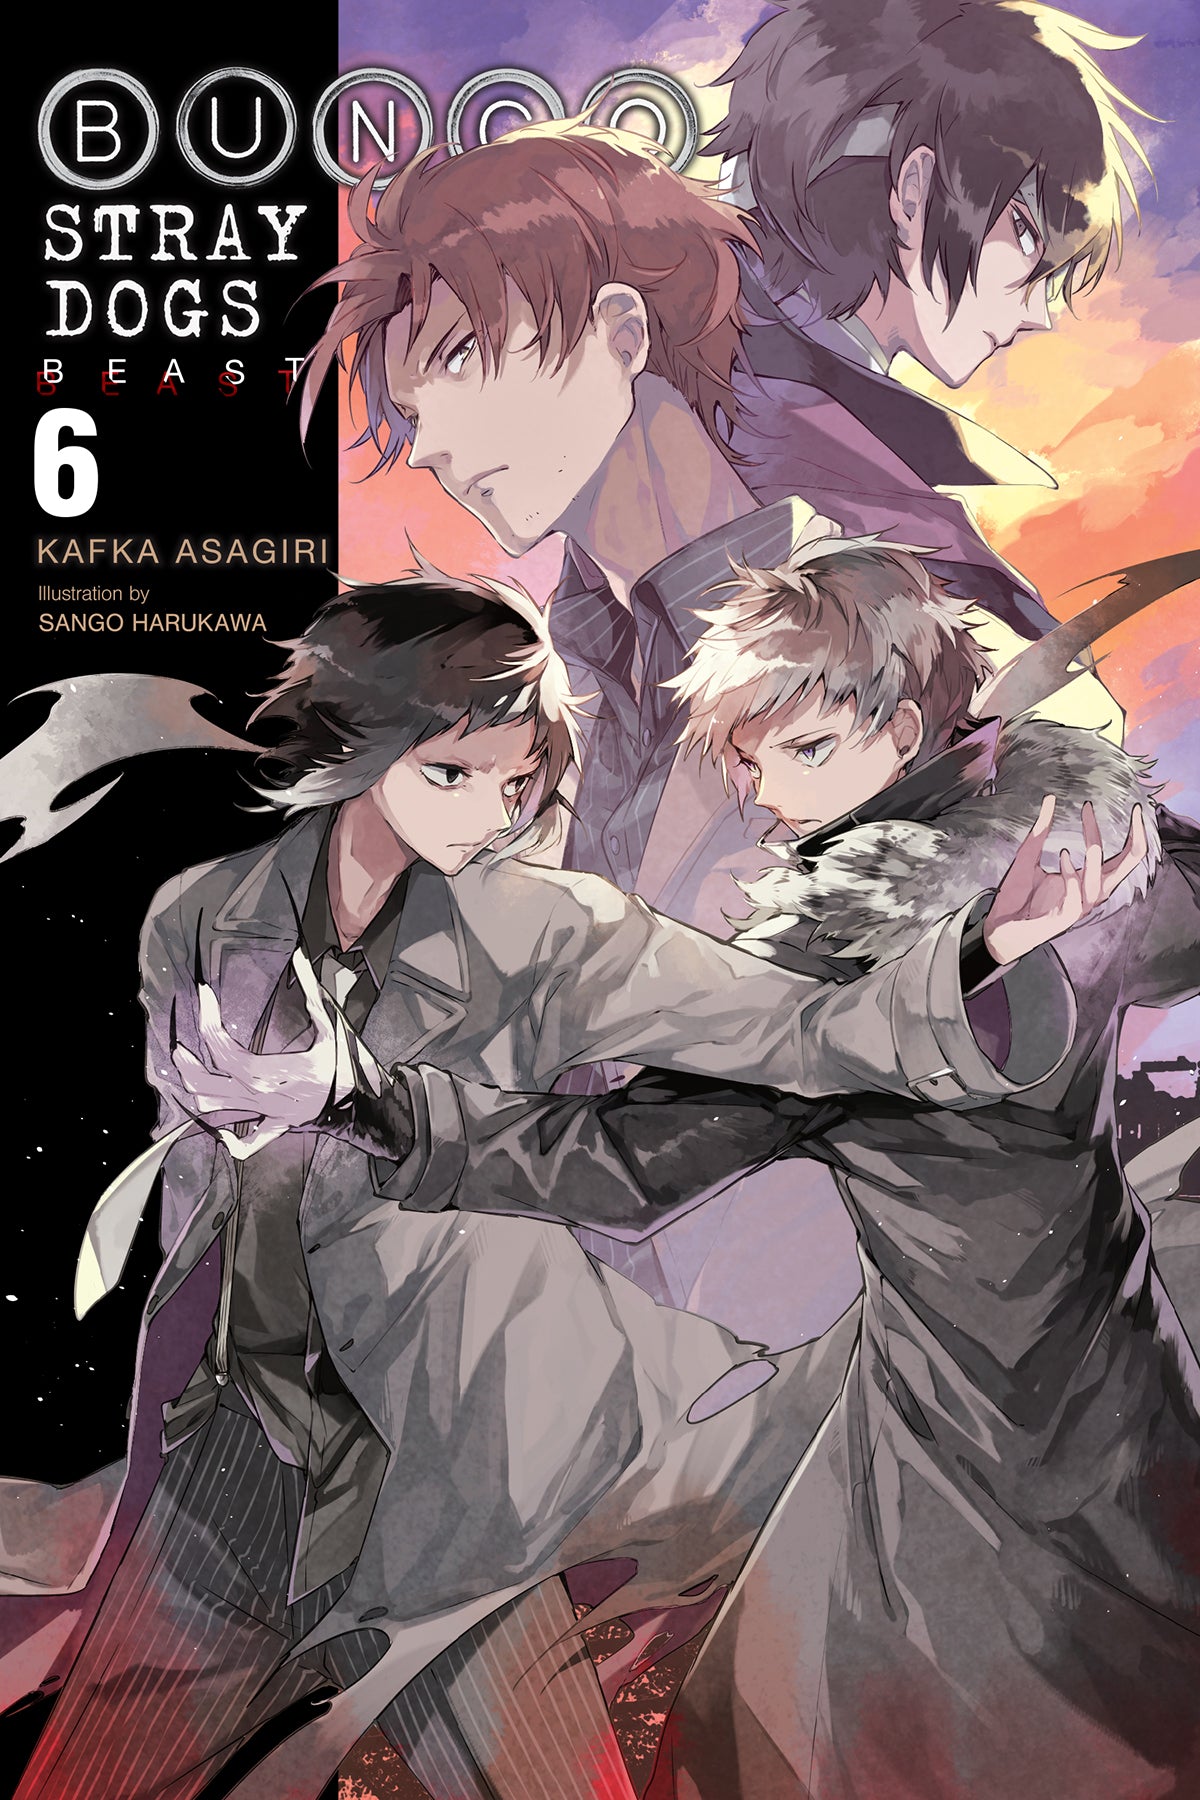 Bungo Stray Dogs Vol. 06 (Light Novel): Beast